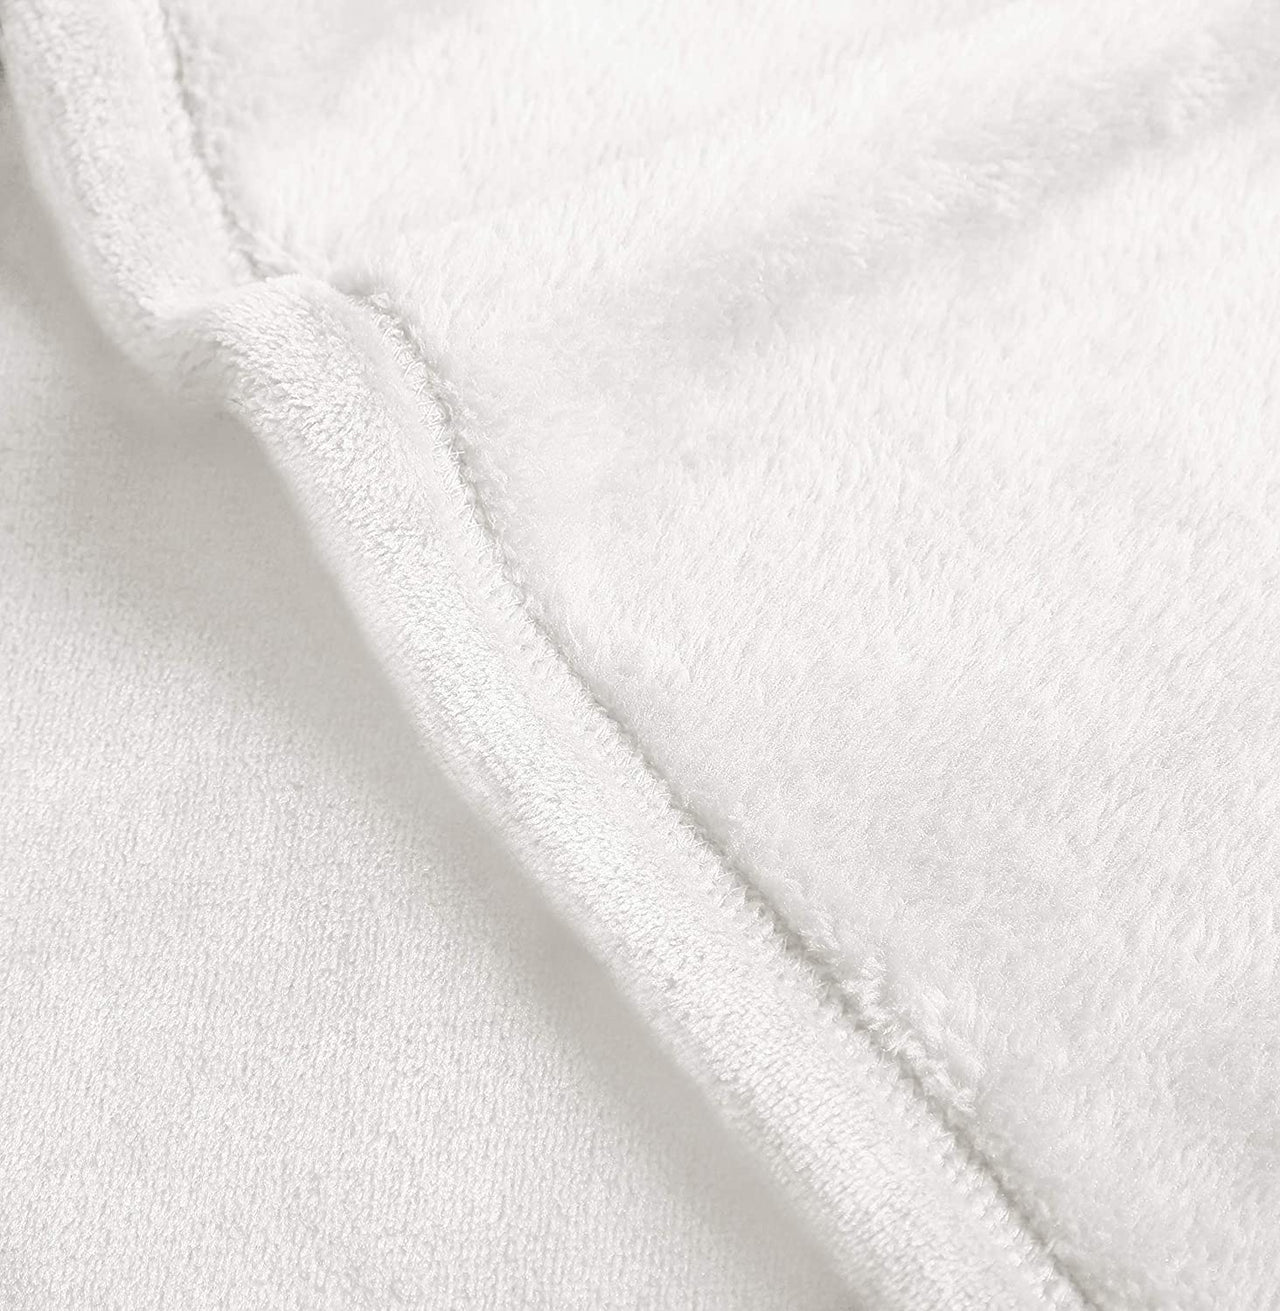 Custom Dog Blanket - Personalized Shut The Fuccupcakes Gift For Dad - Fleece Blanket